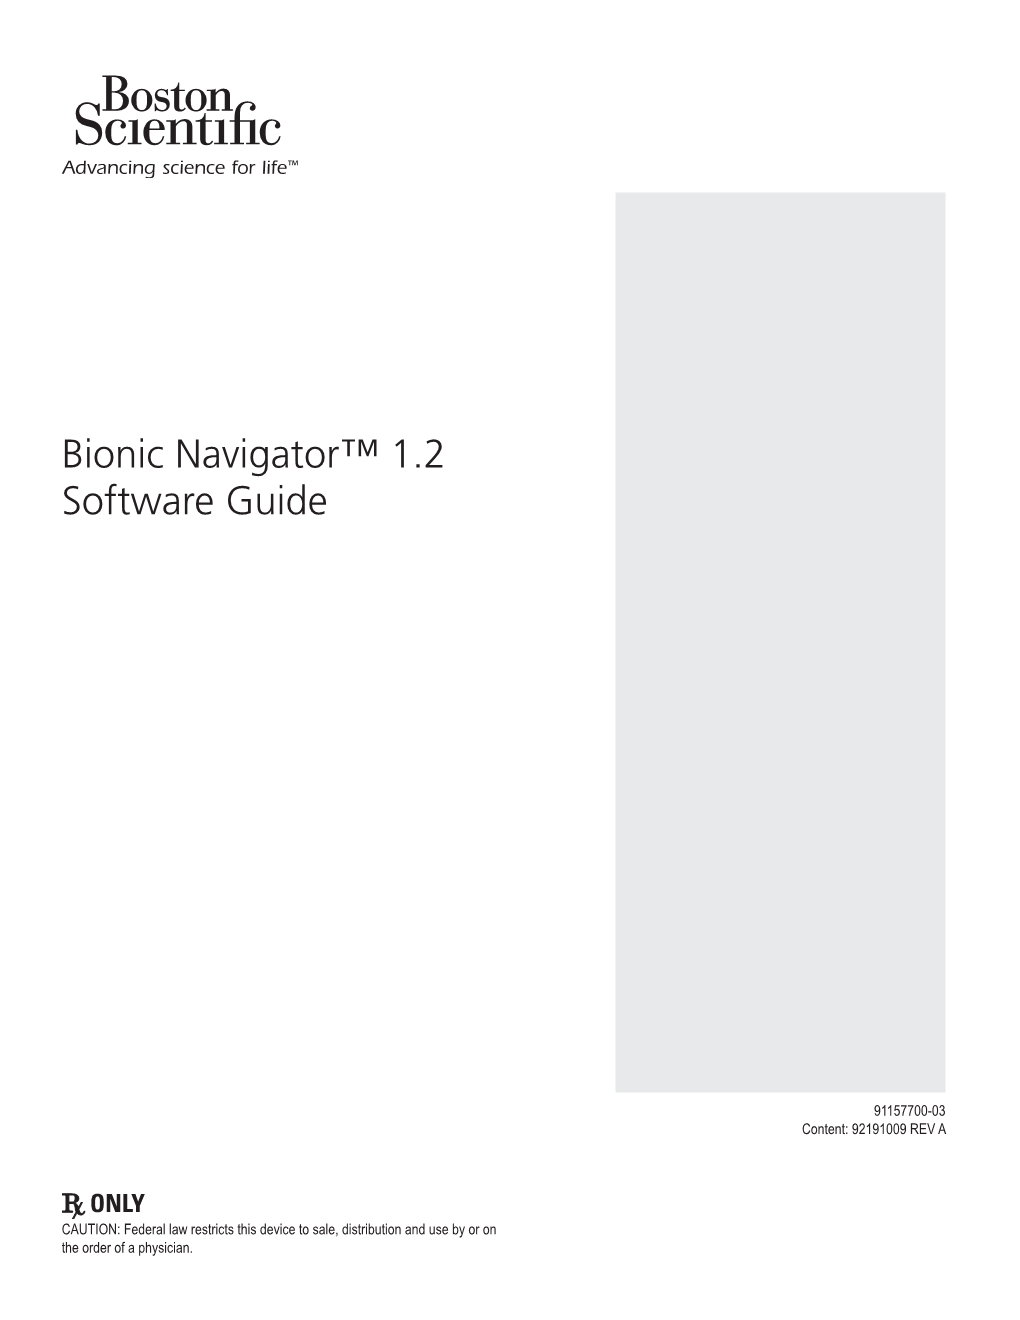 Bionic Navigator™ 1.2 Software Guide